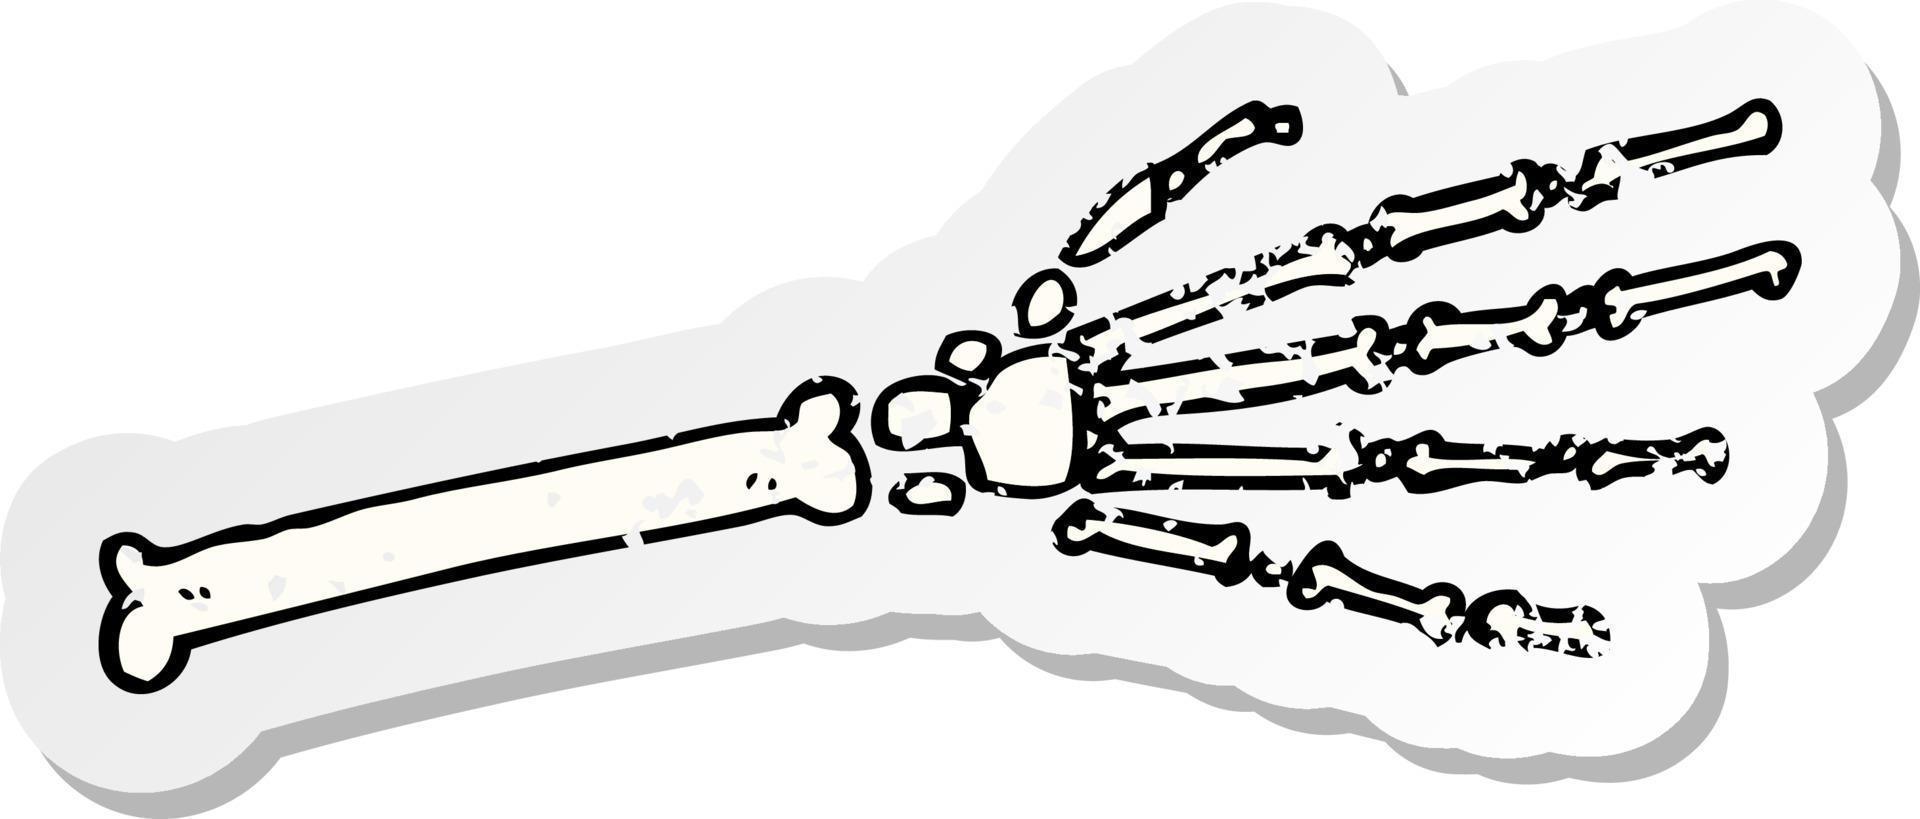 retro distressed sticker of a cartoon skeleton hand vector